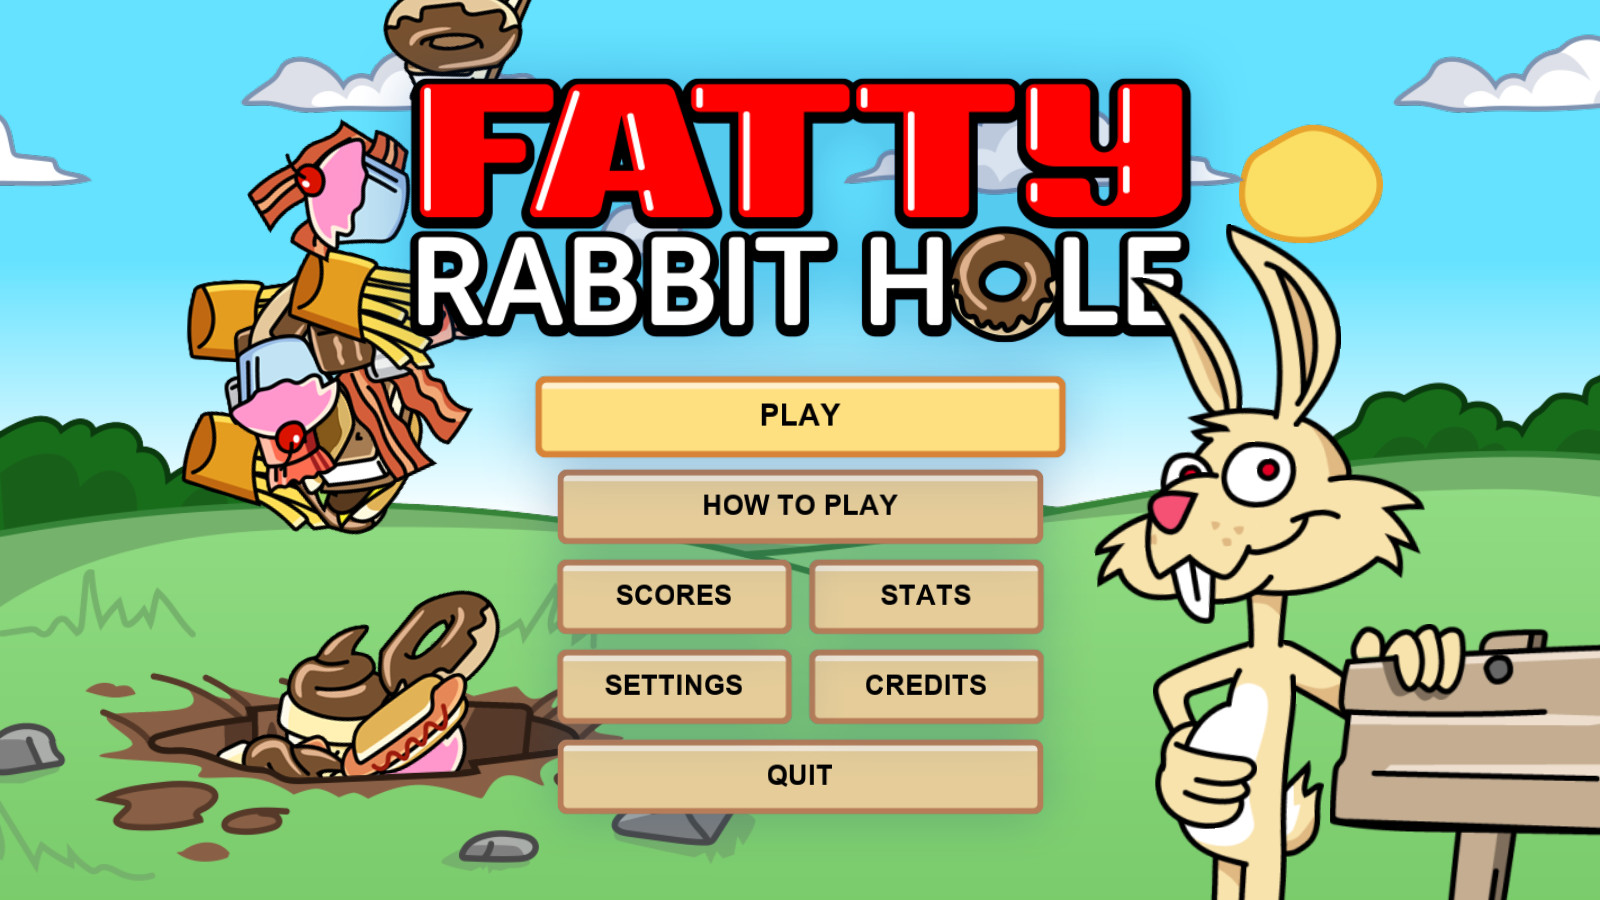 Rabbit hole download. Rabit hole игра. Игра кролики и Норы. Rabbit hole игра управление. Фанни рэбитс игра в стиме 2 кролика.